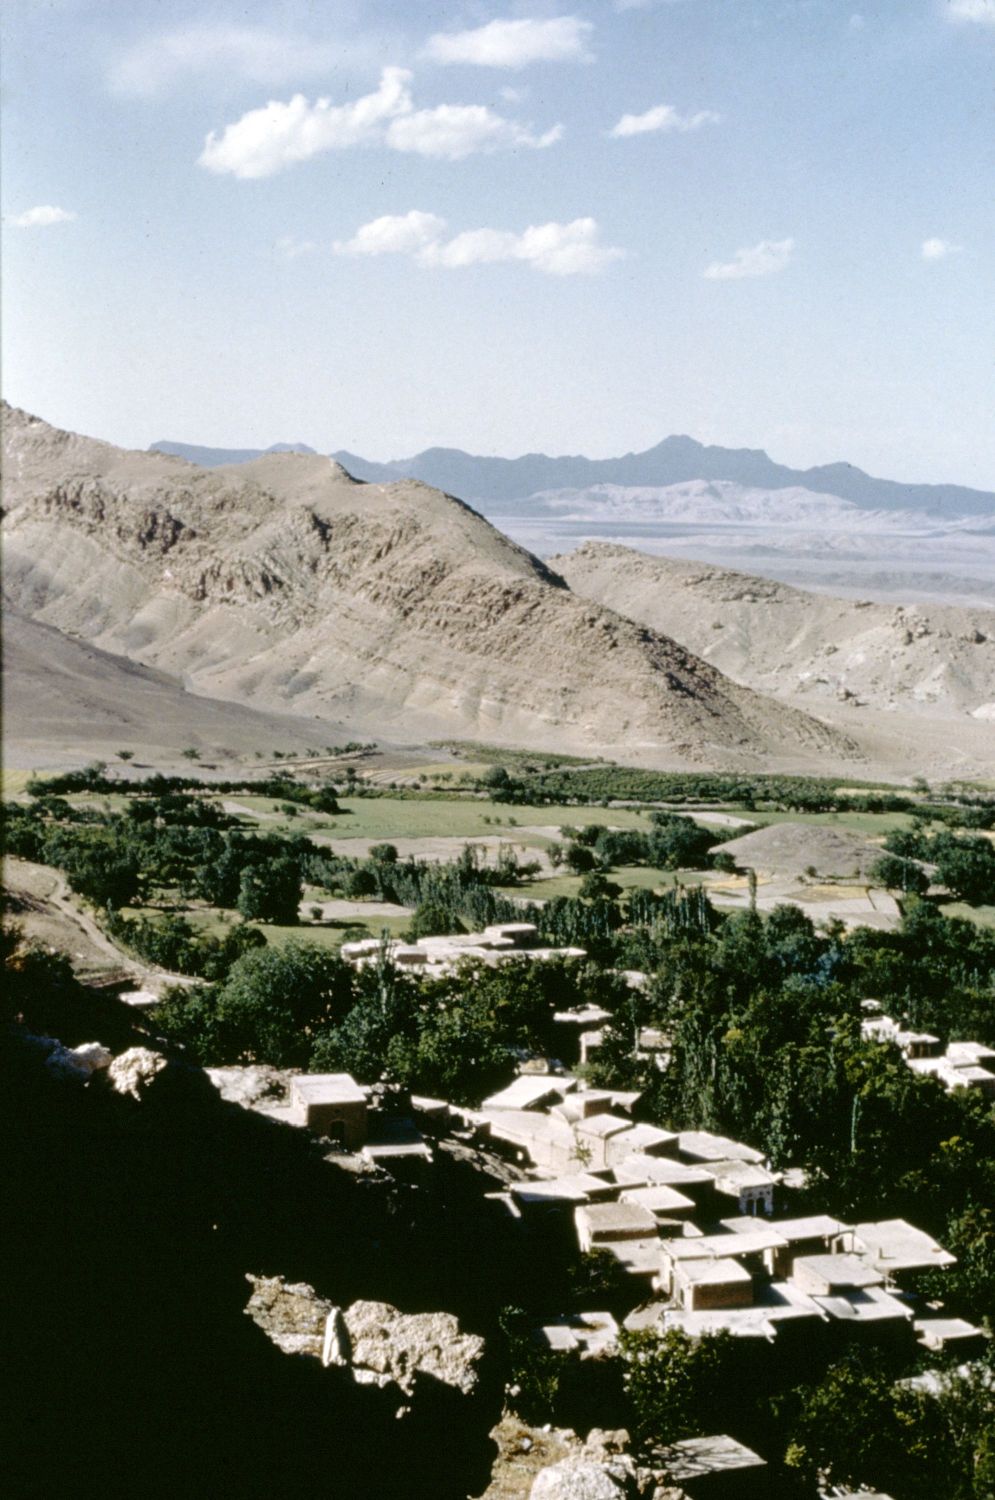 Village of Niyasar, Iran.